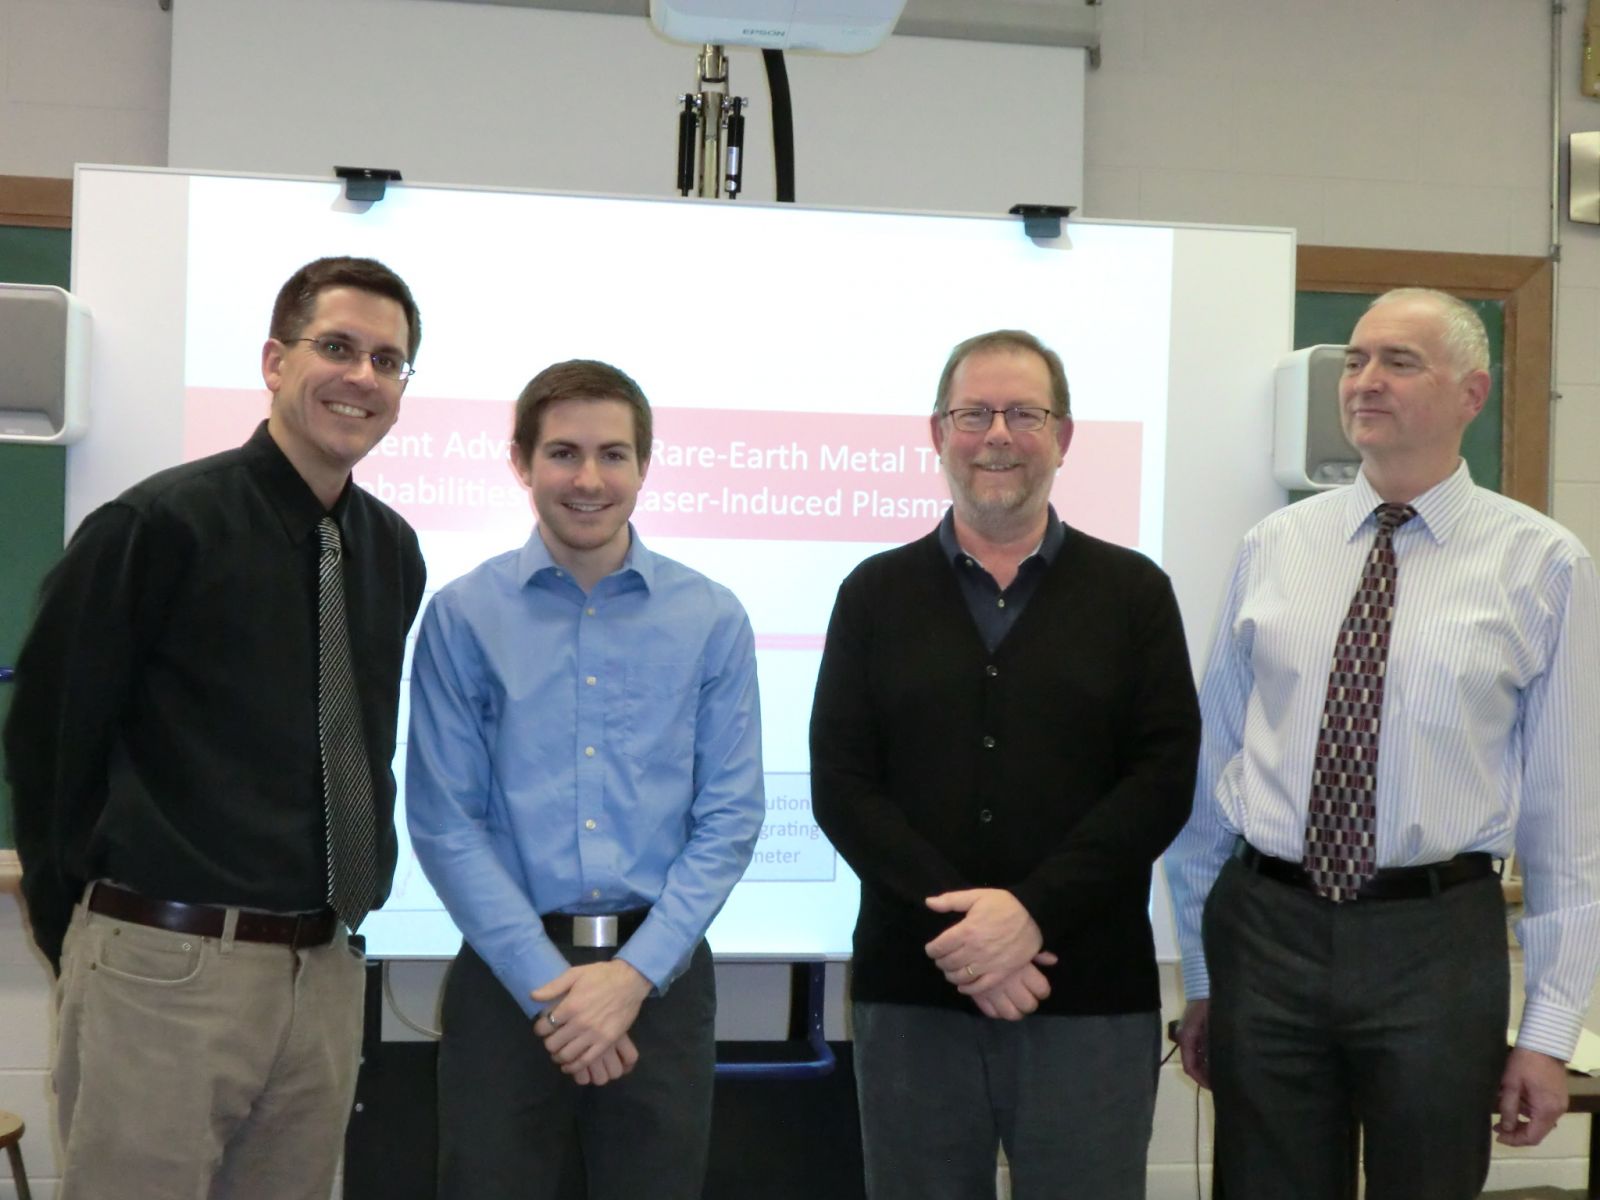 Russell Putnam with Dr. Rehse, Professor Ian Samson and Professor Wladisaw Kedzierski